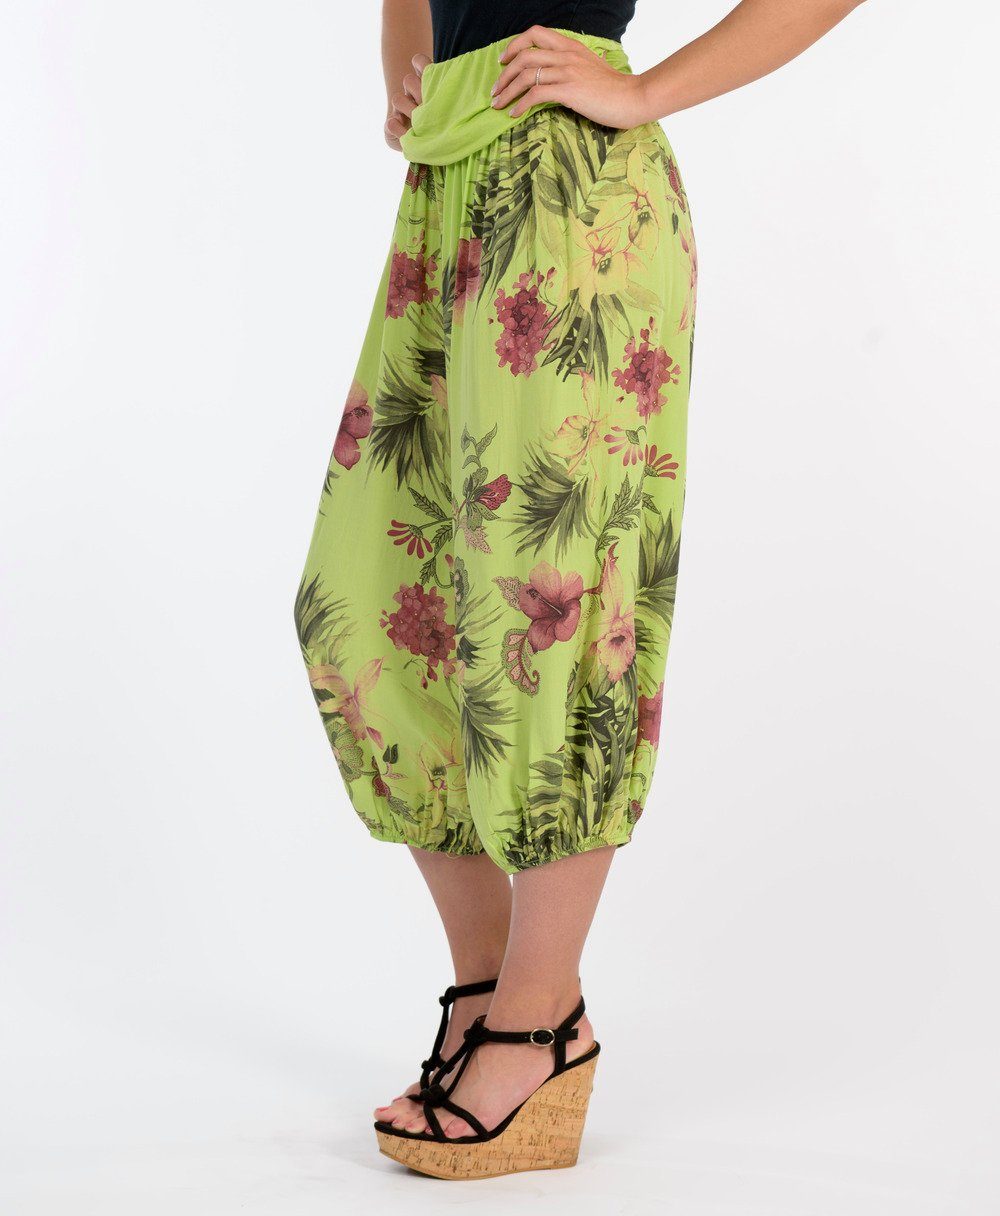 Einheitsgröße more Aladinhose hellgrün floralem mit malito 8938 than Haremshose Muster fashion